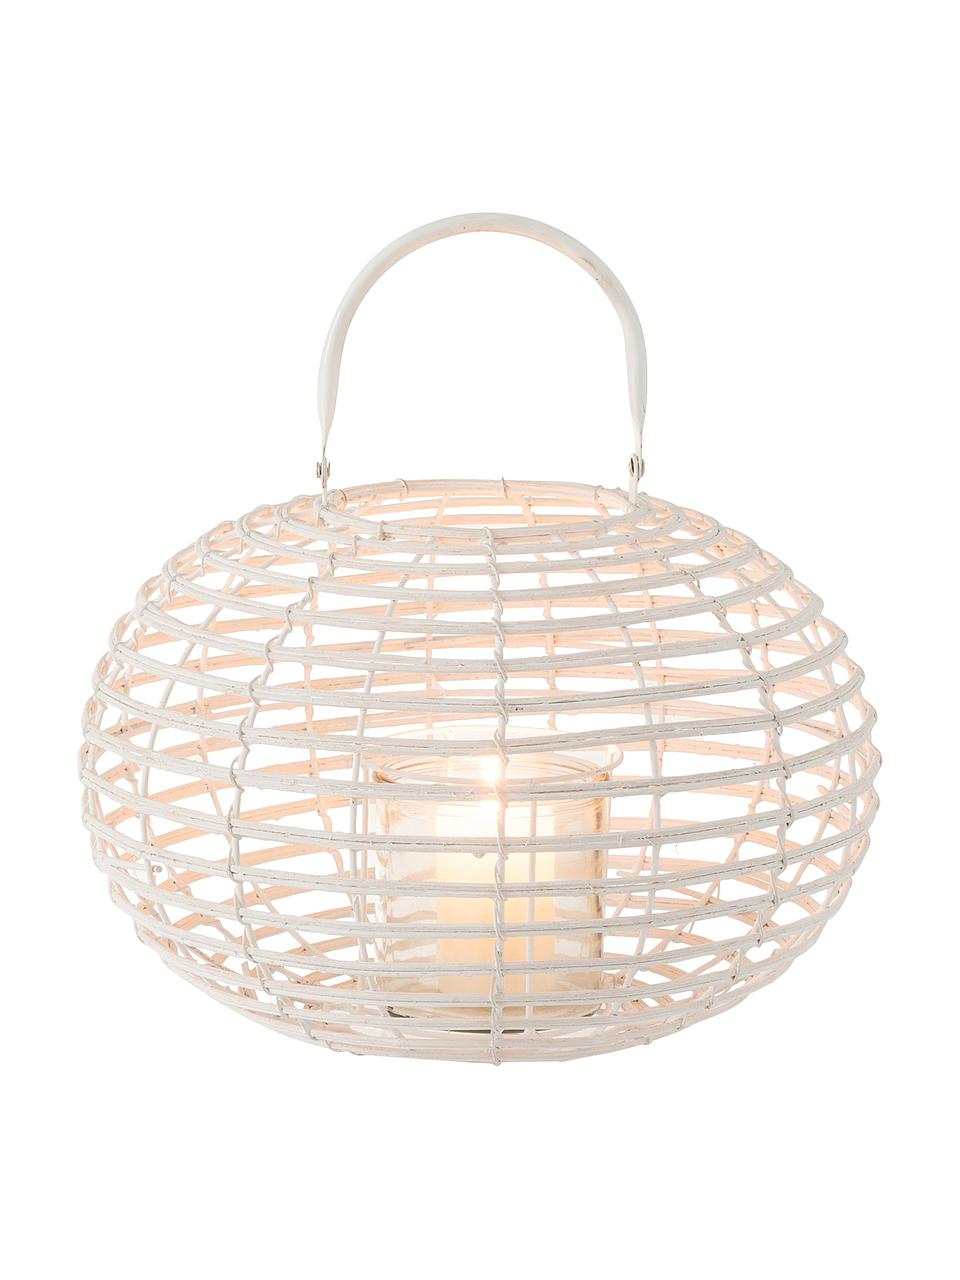 Rotan lantaarn Ball in wit, Wit, Ø 34 x H 26 cm